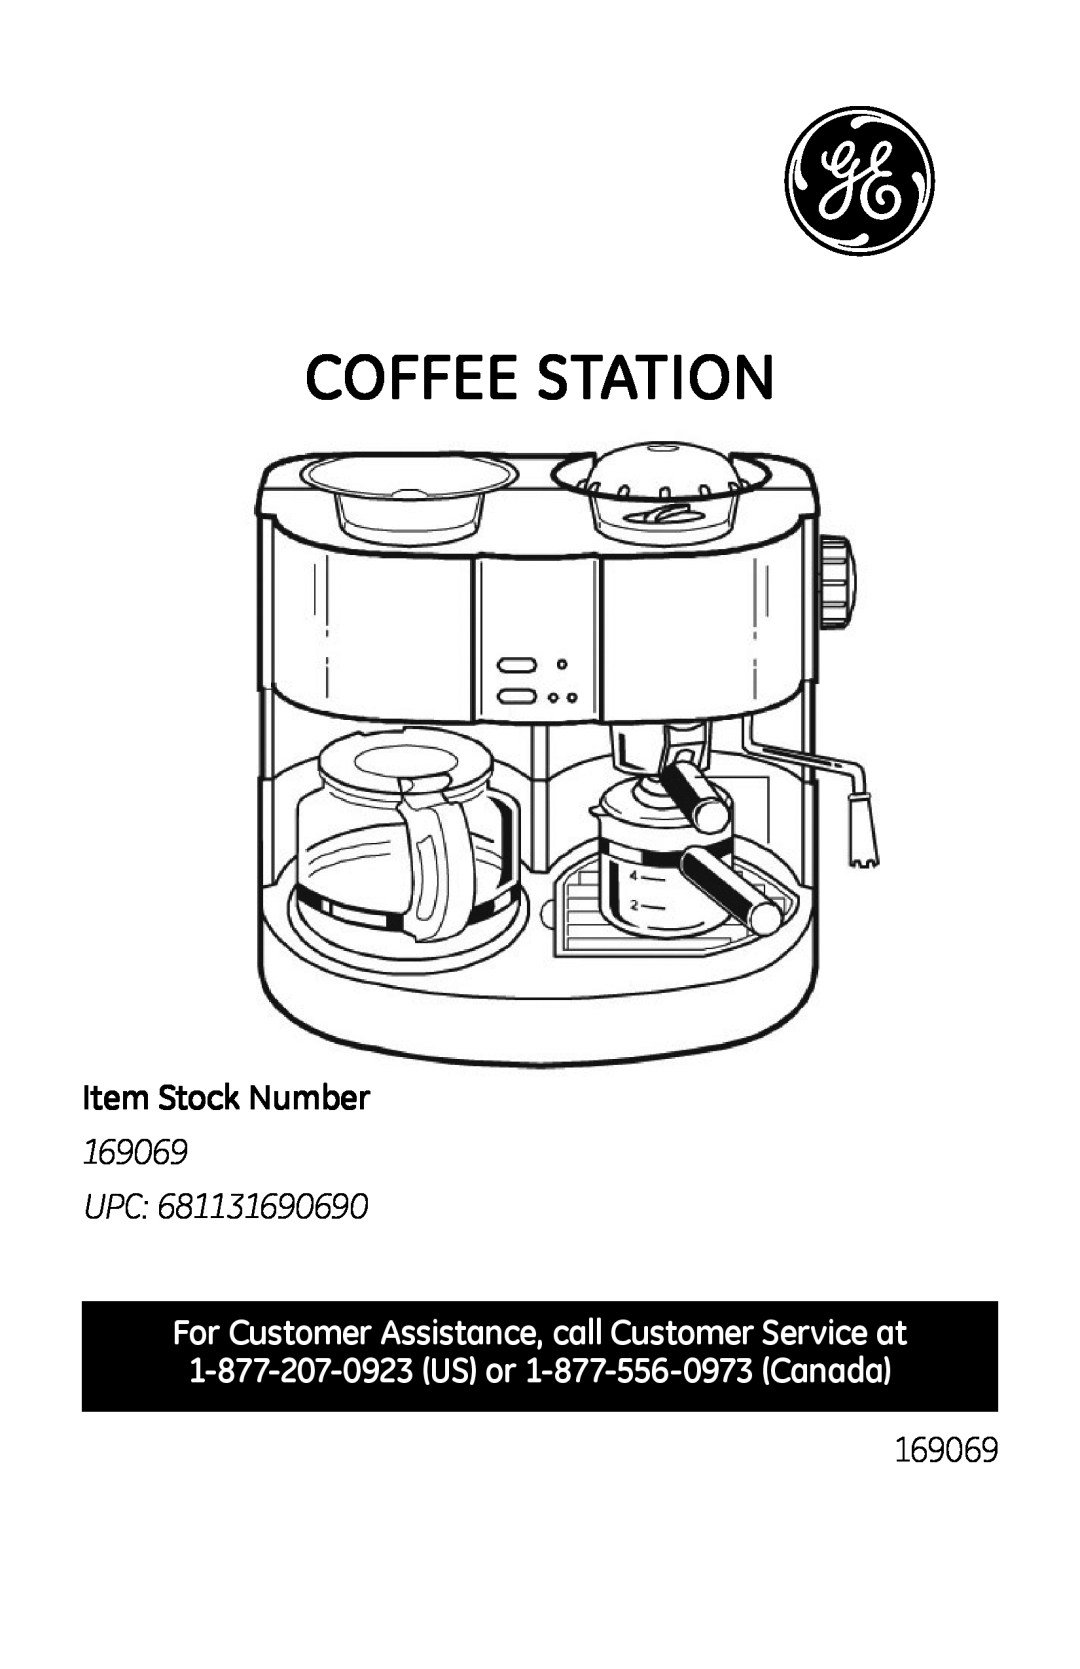 GE 681131690690 manual Coffee Station, Item Stock Number, 169069 UPC 